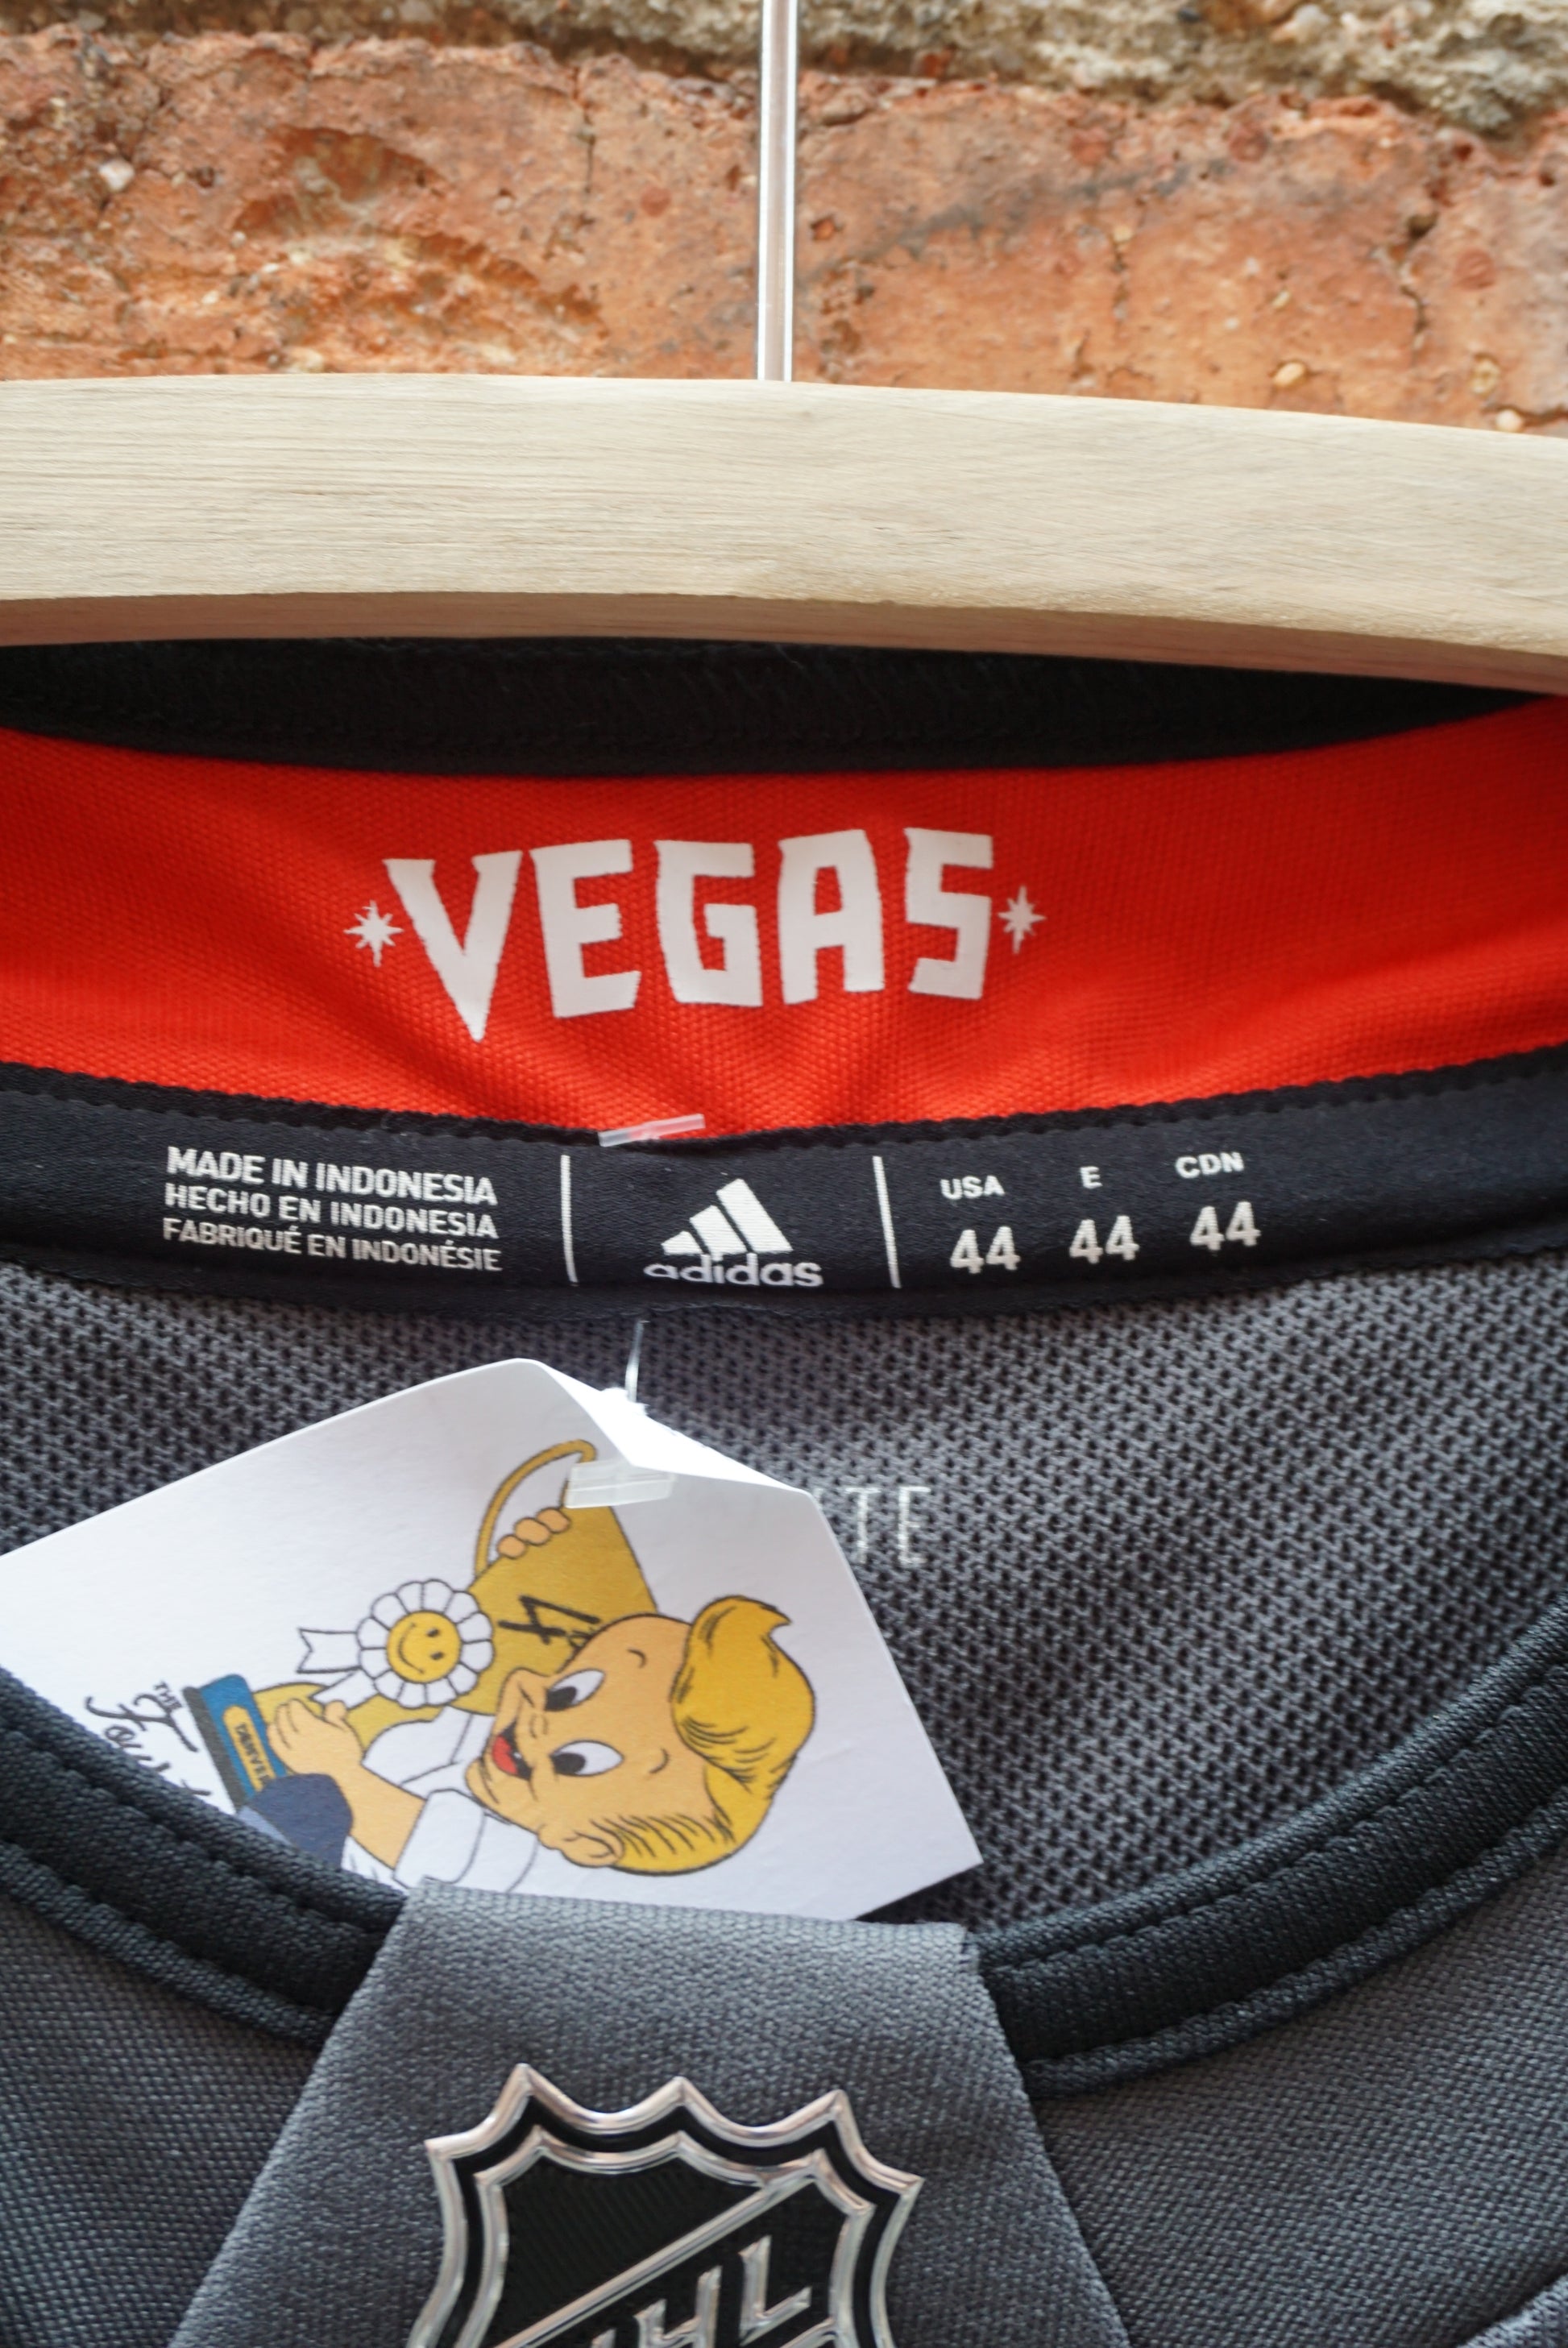 Las Vegas Golden Knights Hockey Jersey - Size Large - 2017